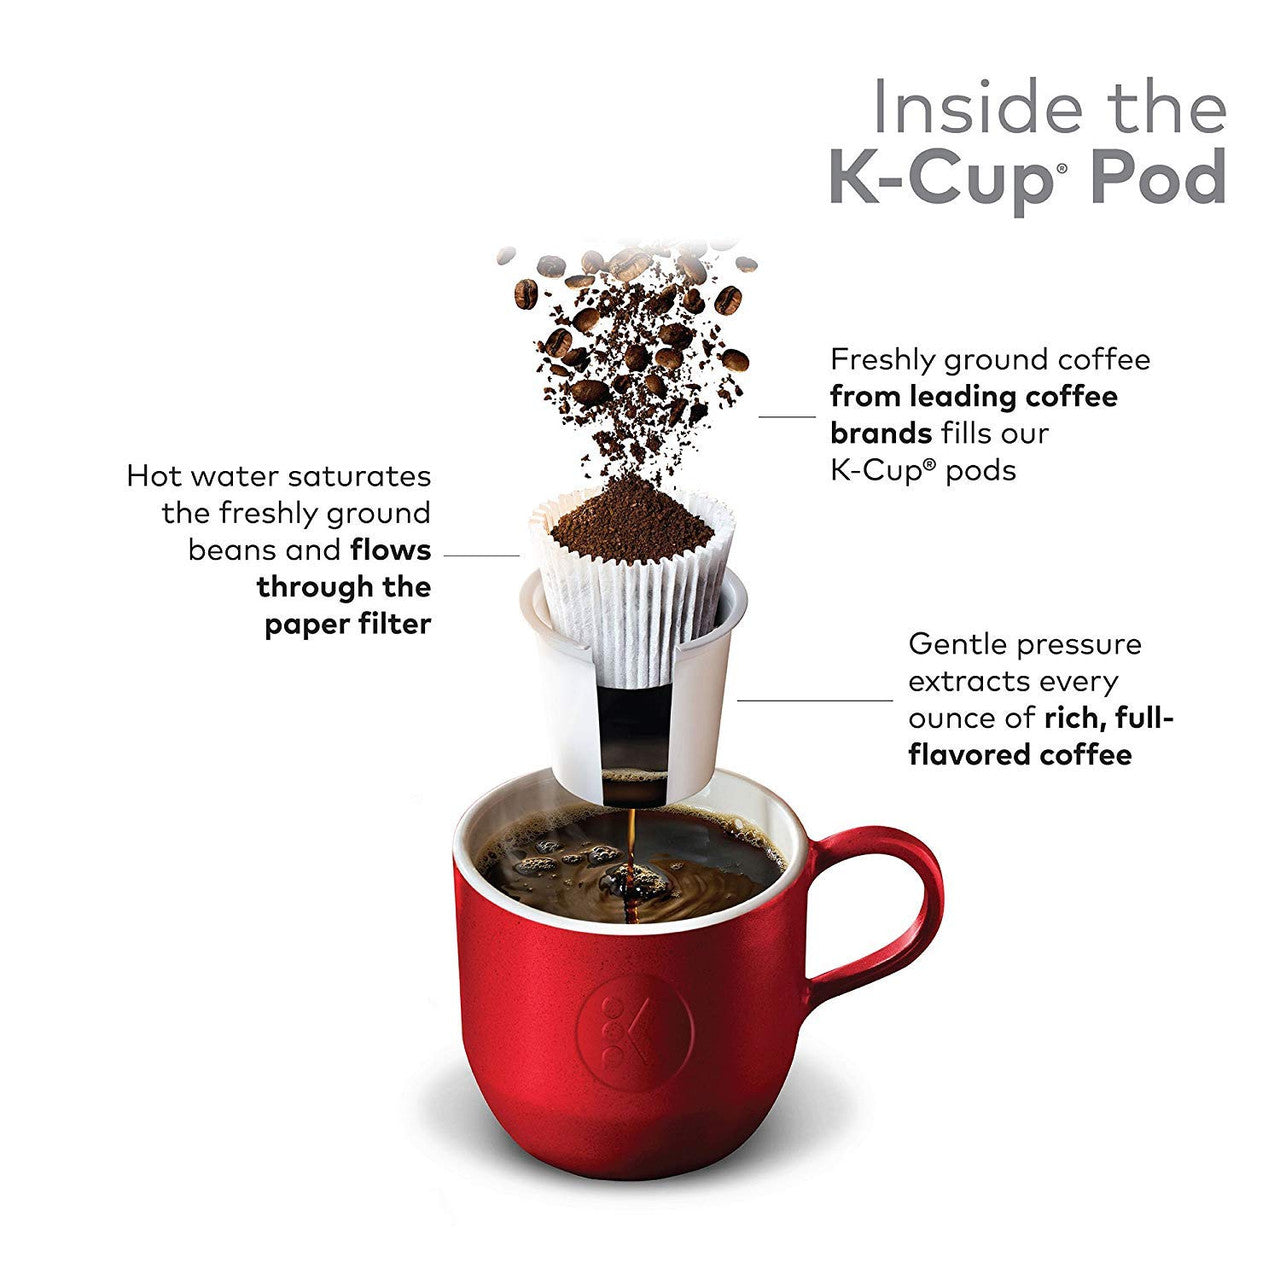 Tim Hortons Original Blend Medium Roast Coffee - 72 Single Serve K-Cups for Keurig Brewers